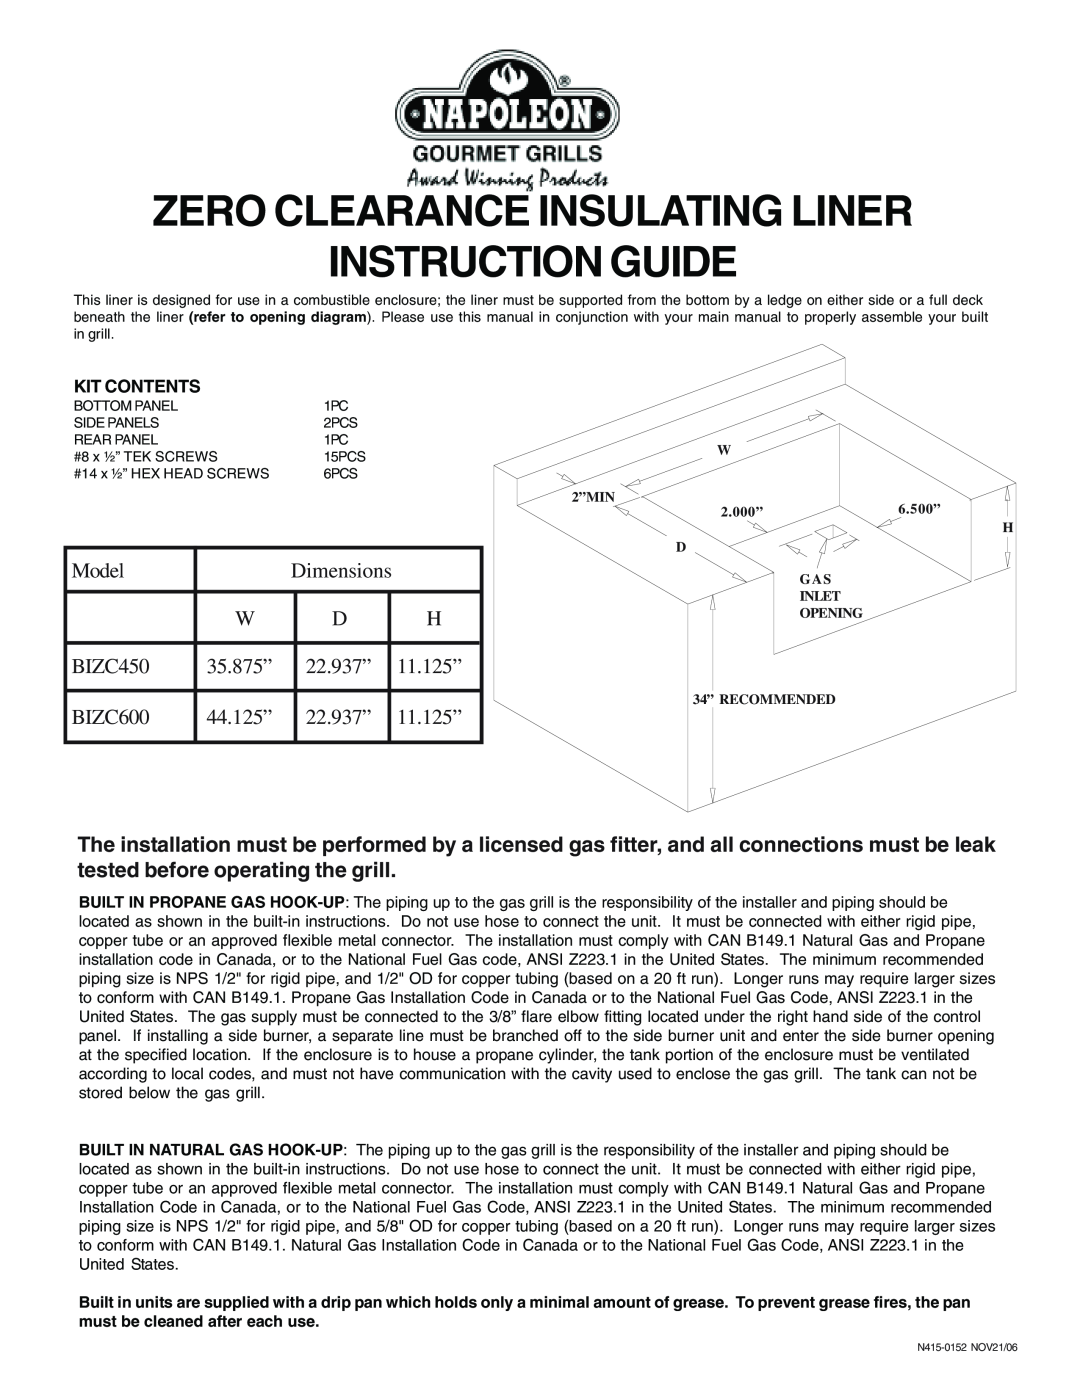 Napoleon Grills BIZC450, BIZC600 dimensions Zero Clearance Insulating Liner Instruction Guide, Kit Contents 